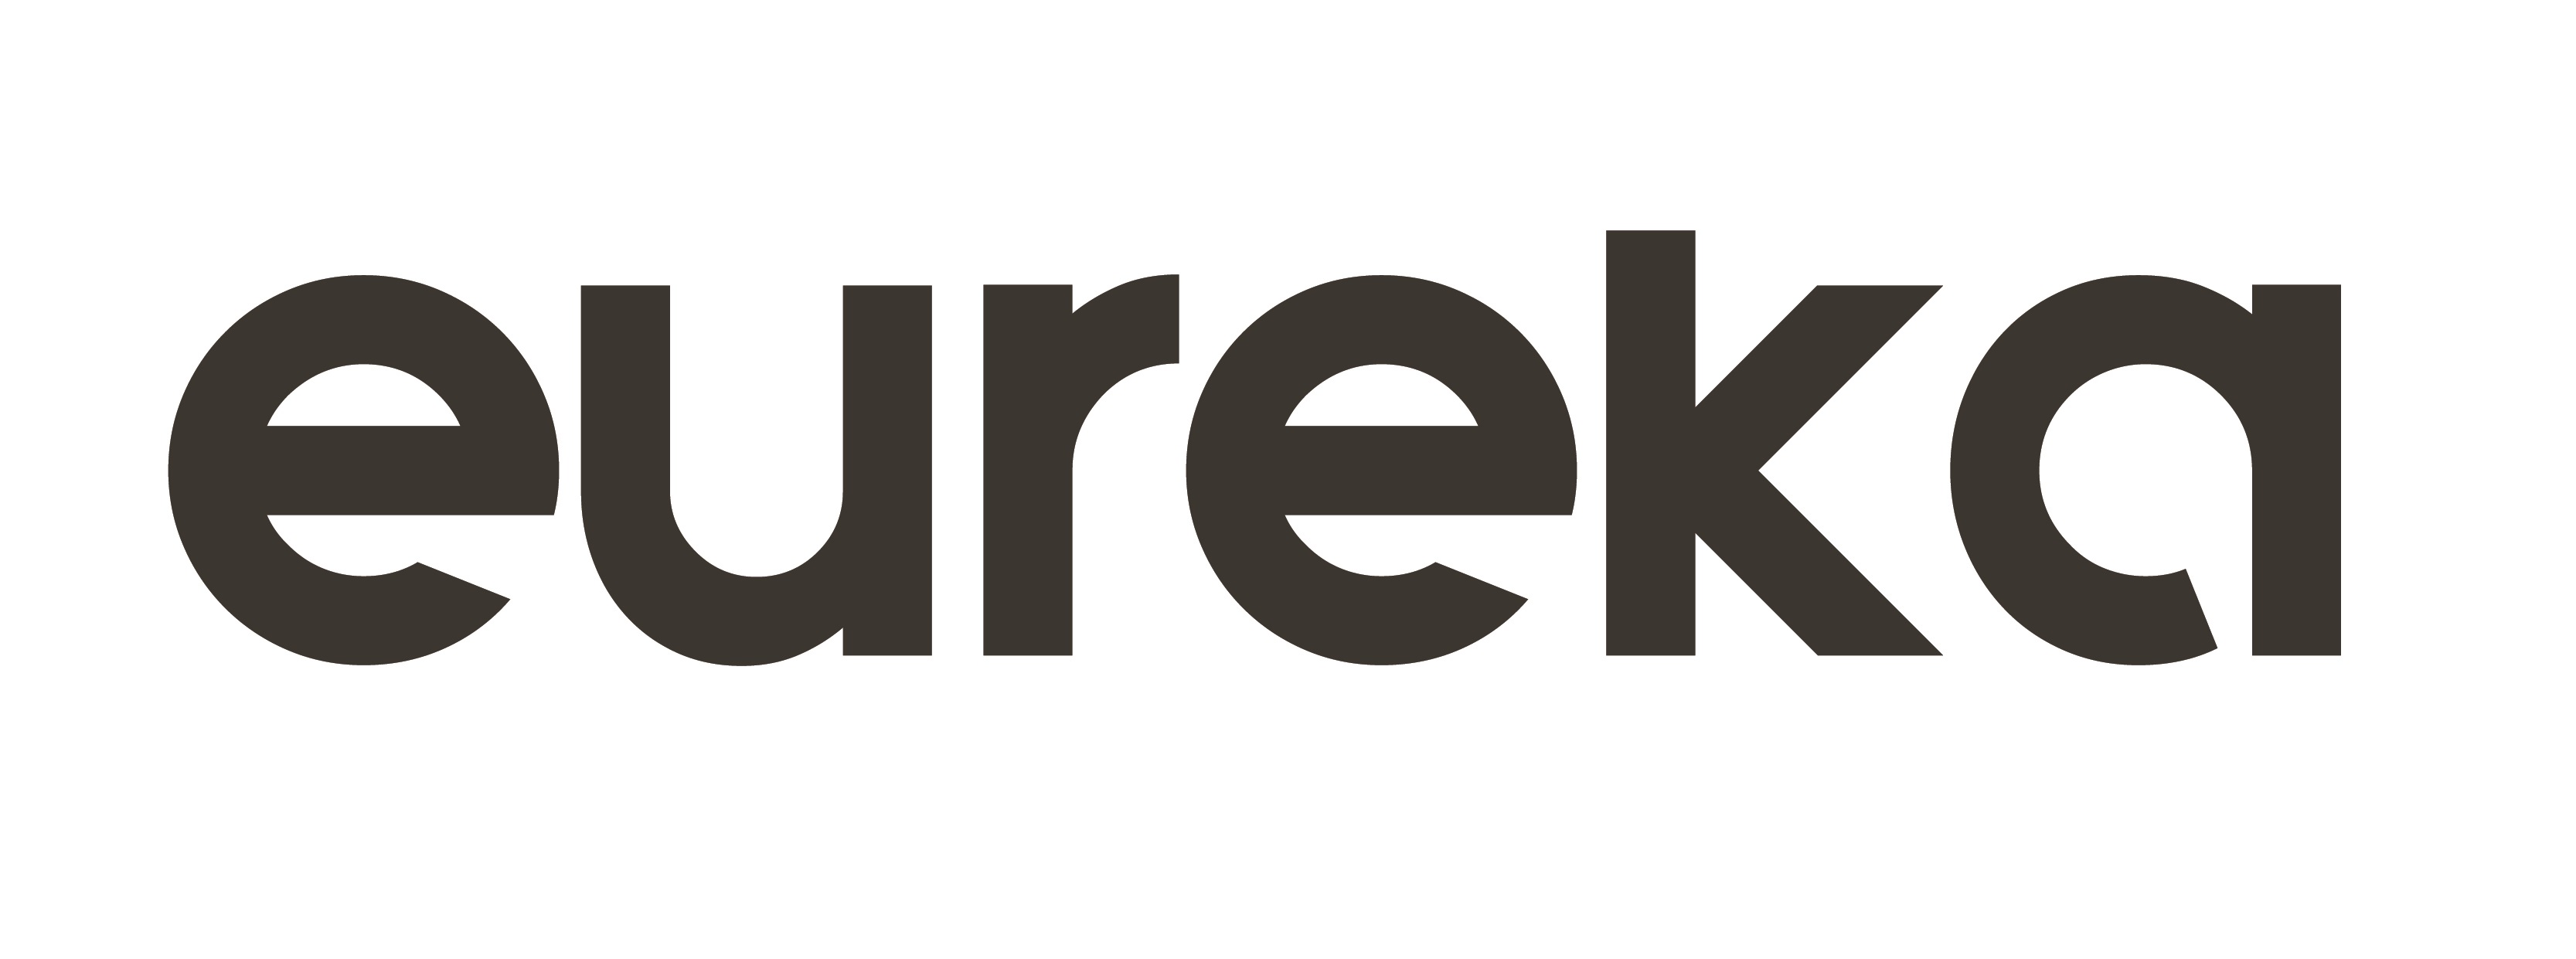 Eureka  NEW300